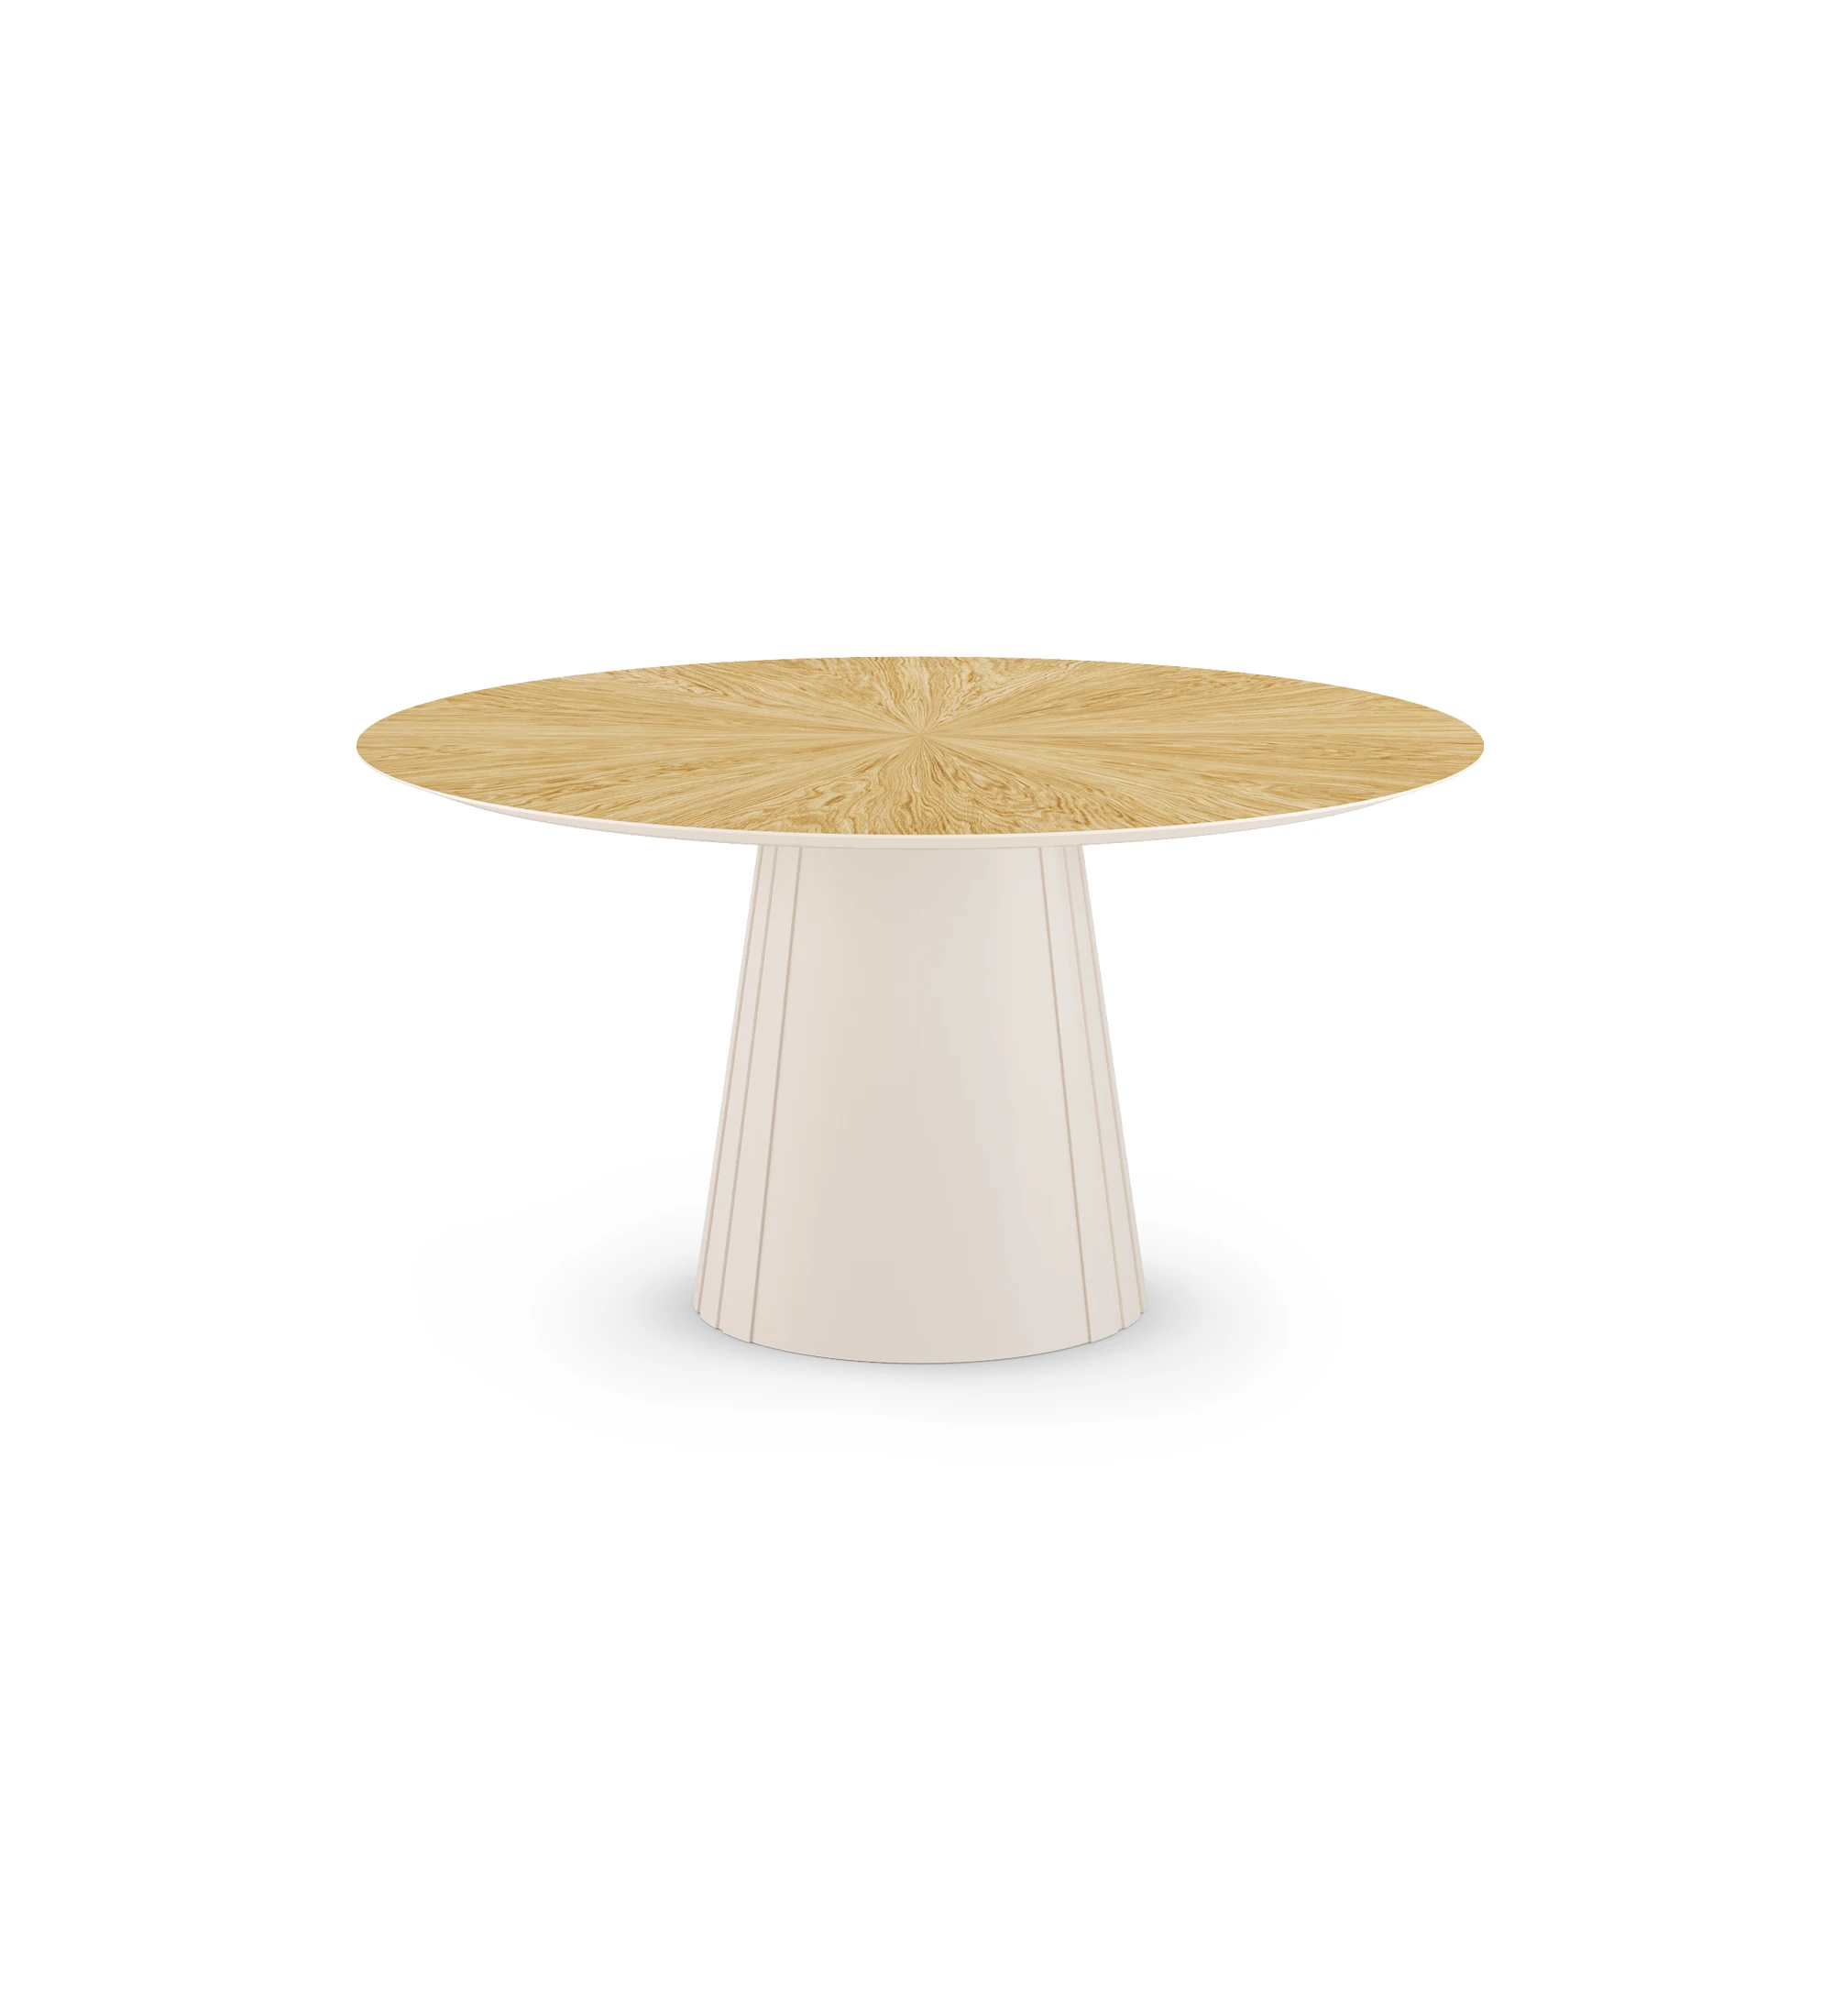 Mesa de comedor Cannes redonda Ø 150 cm, tapa en roble natural, pie lacado perla.